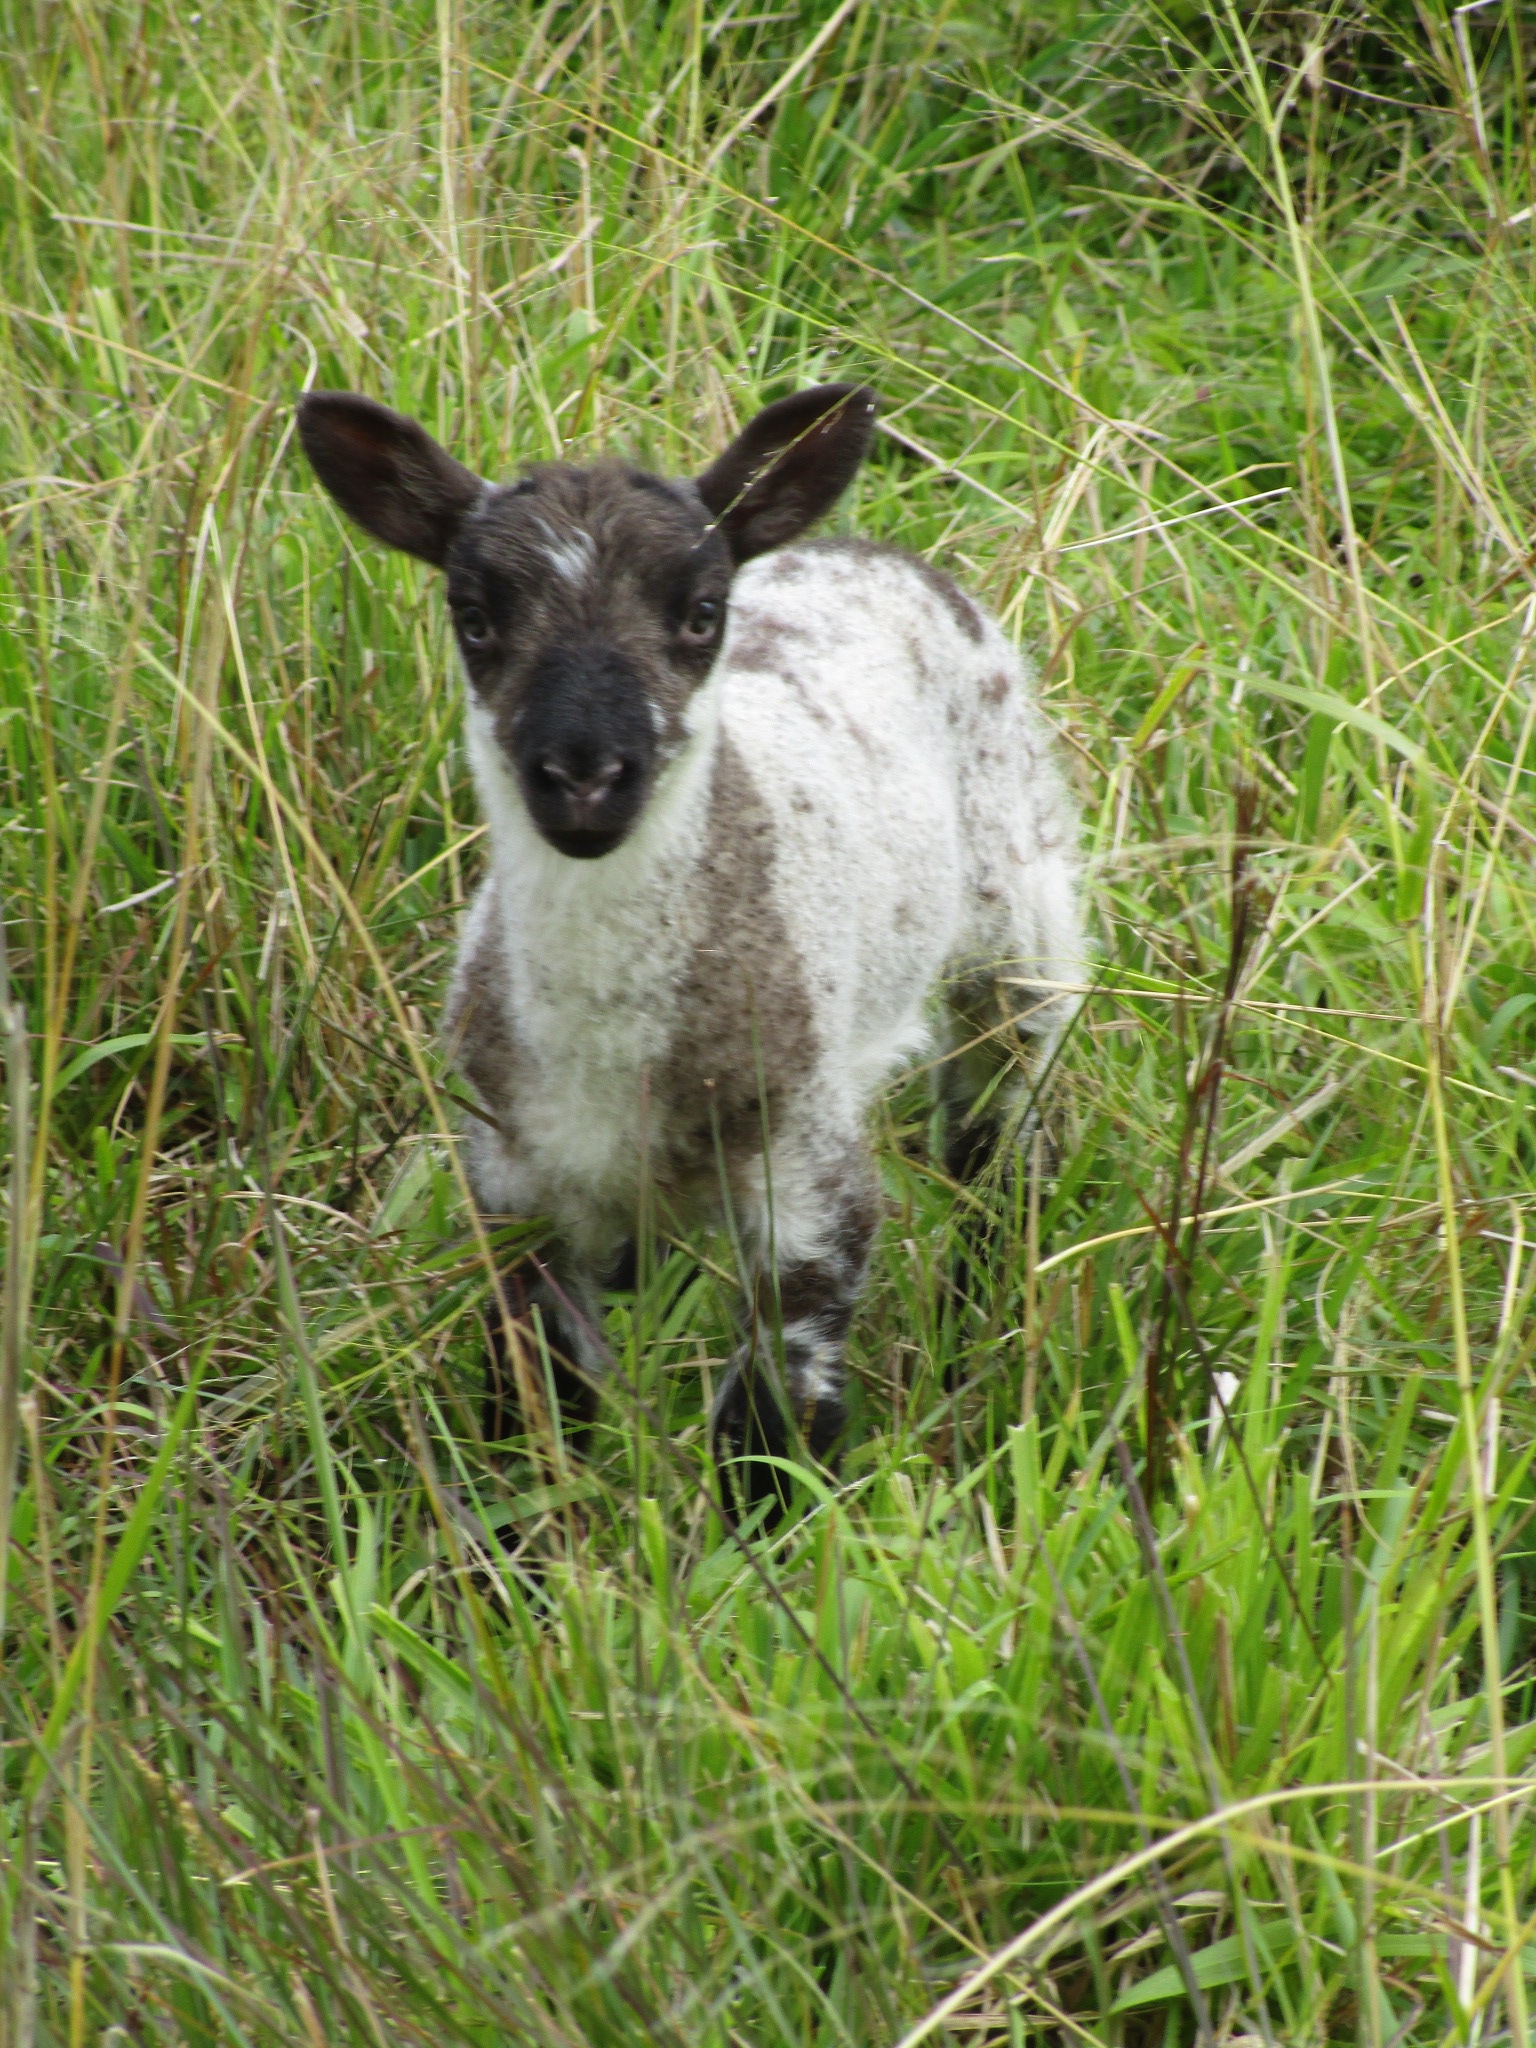 Ram lamb at 10 days old